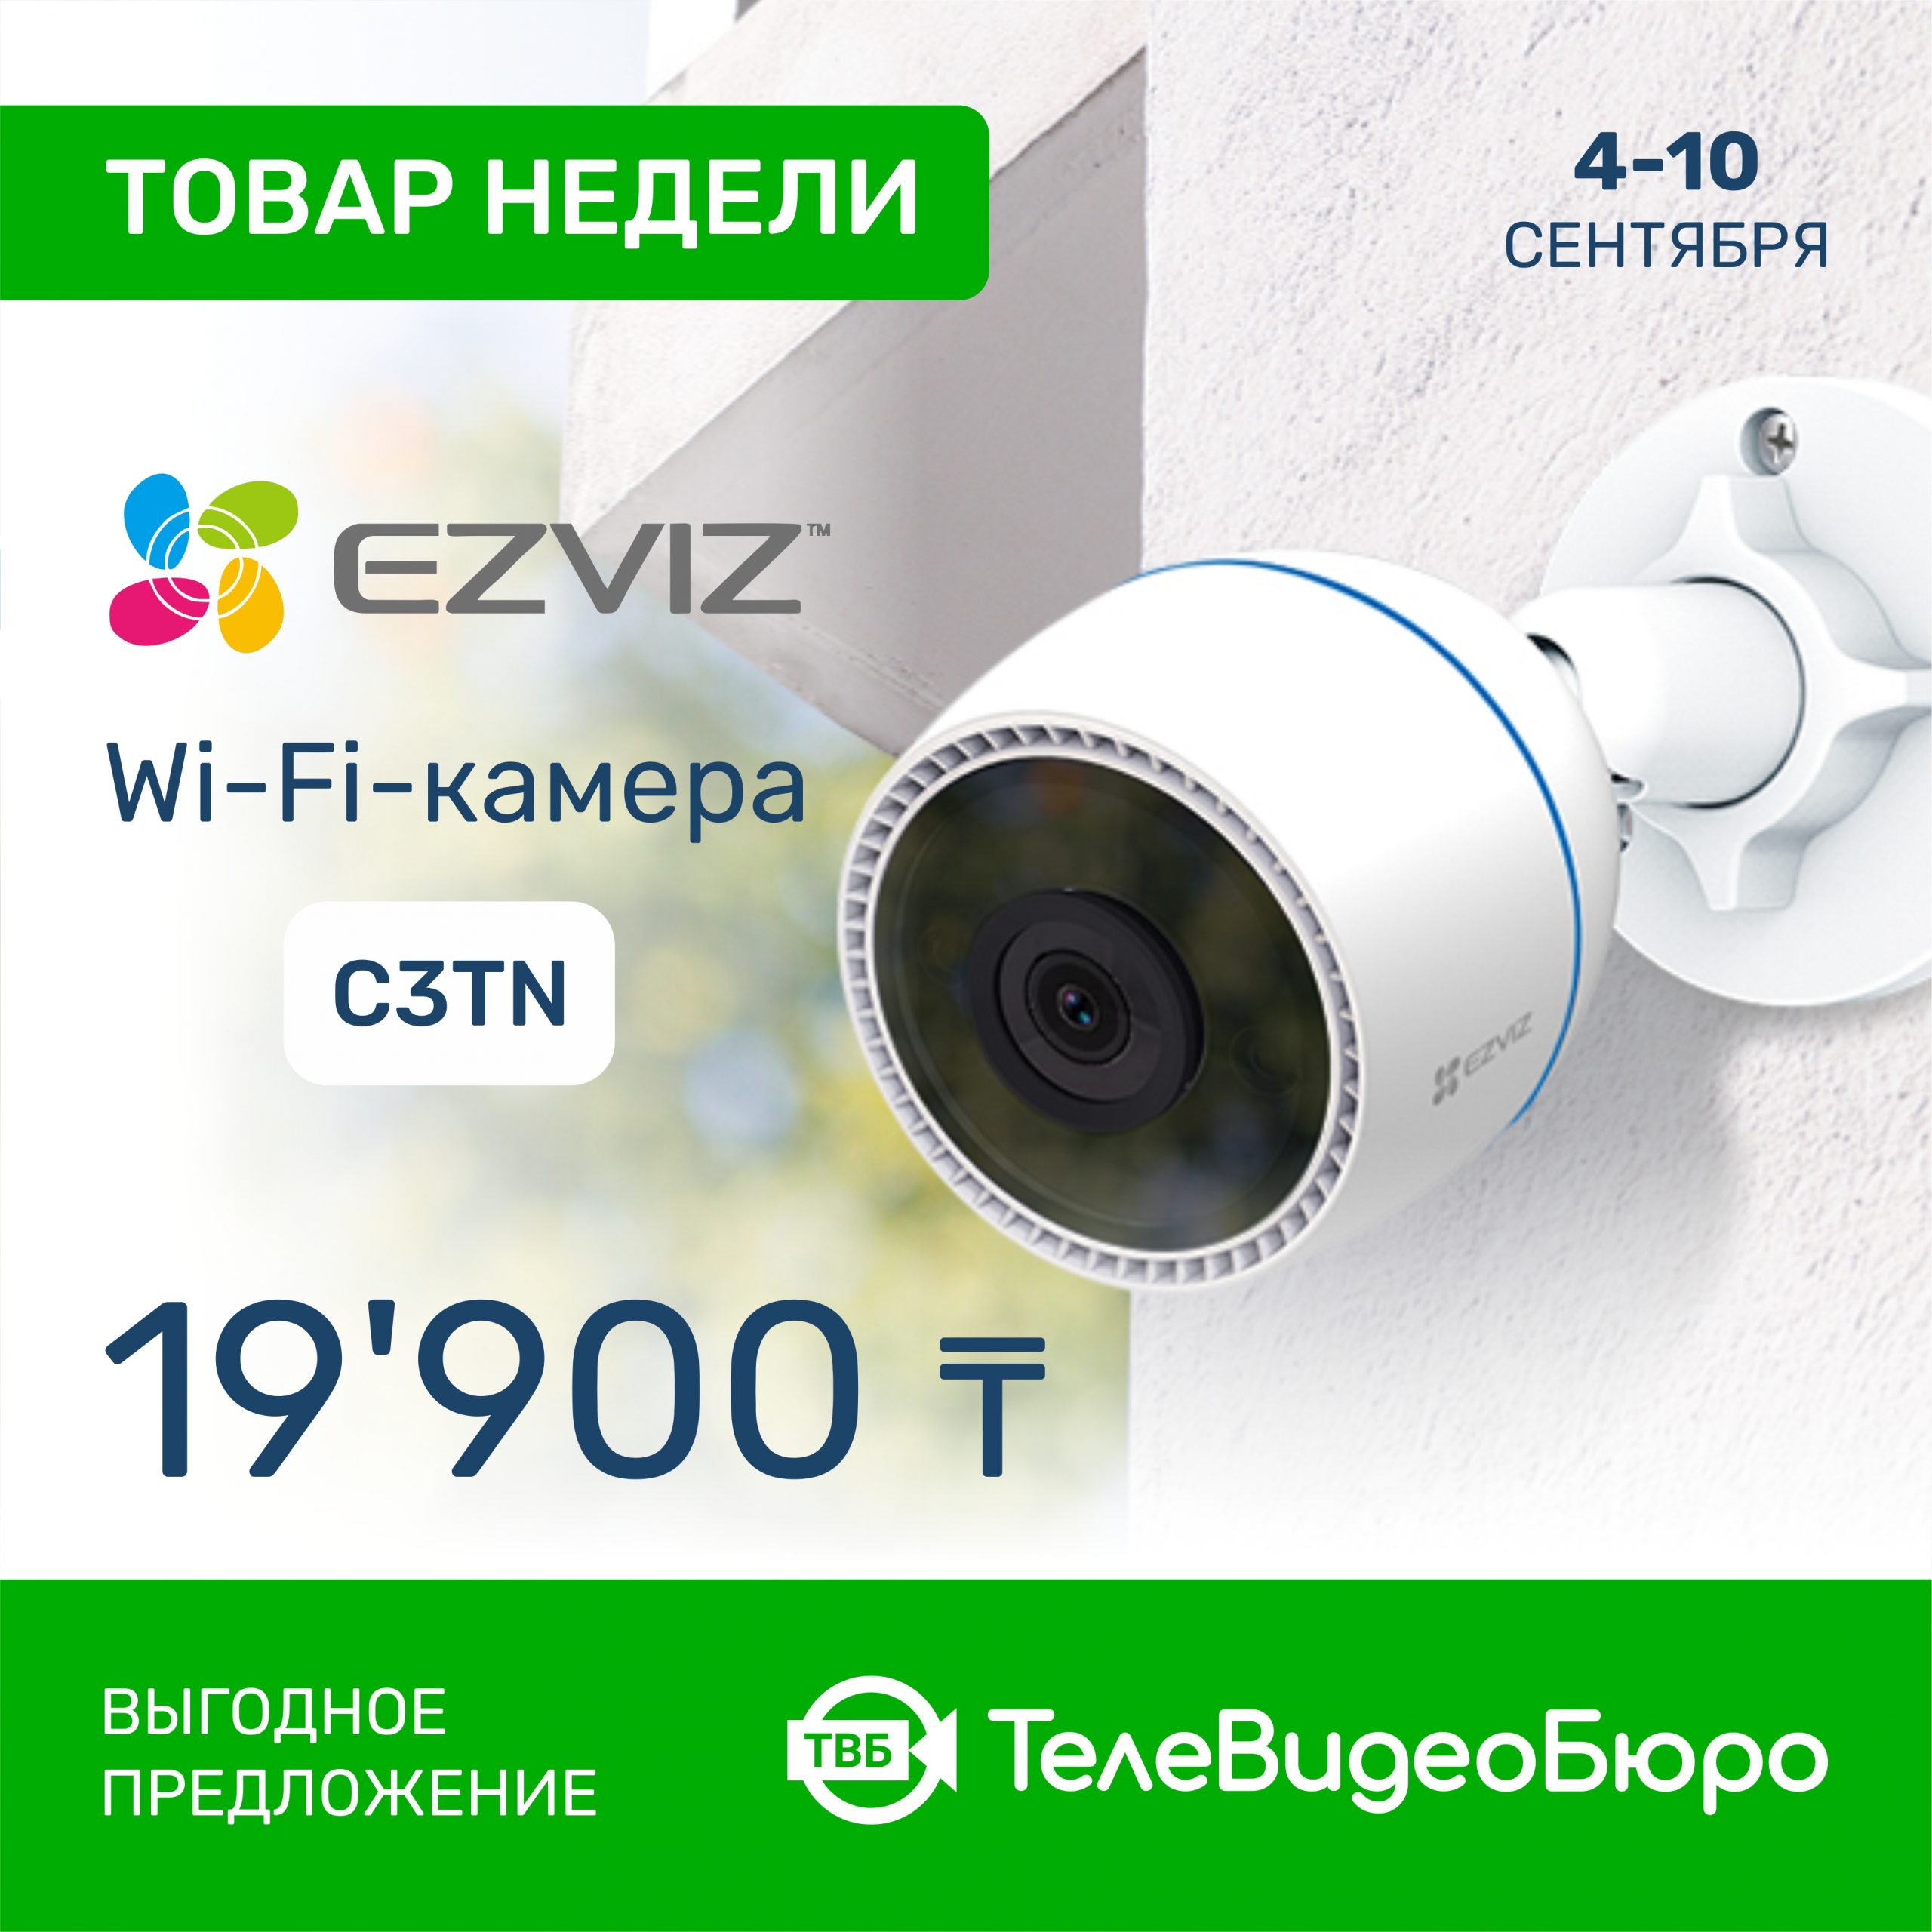 Товар Недели в Магазине Систем Безопасности “ТелеВидеоБюро” – WiFi<br>Камера Ezviz C3TN!